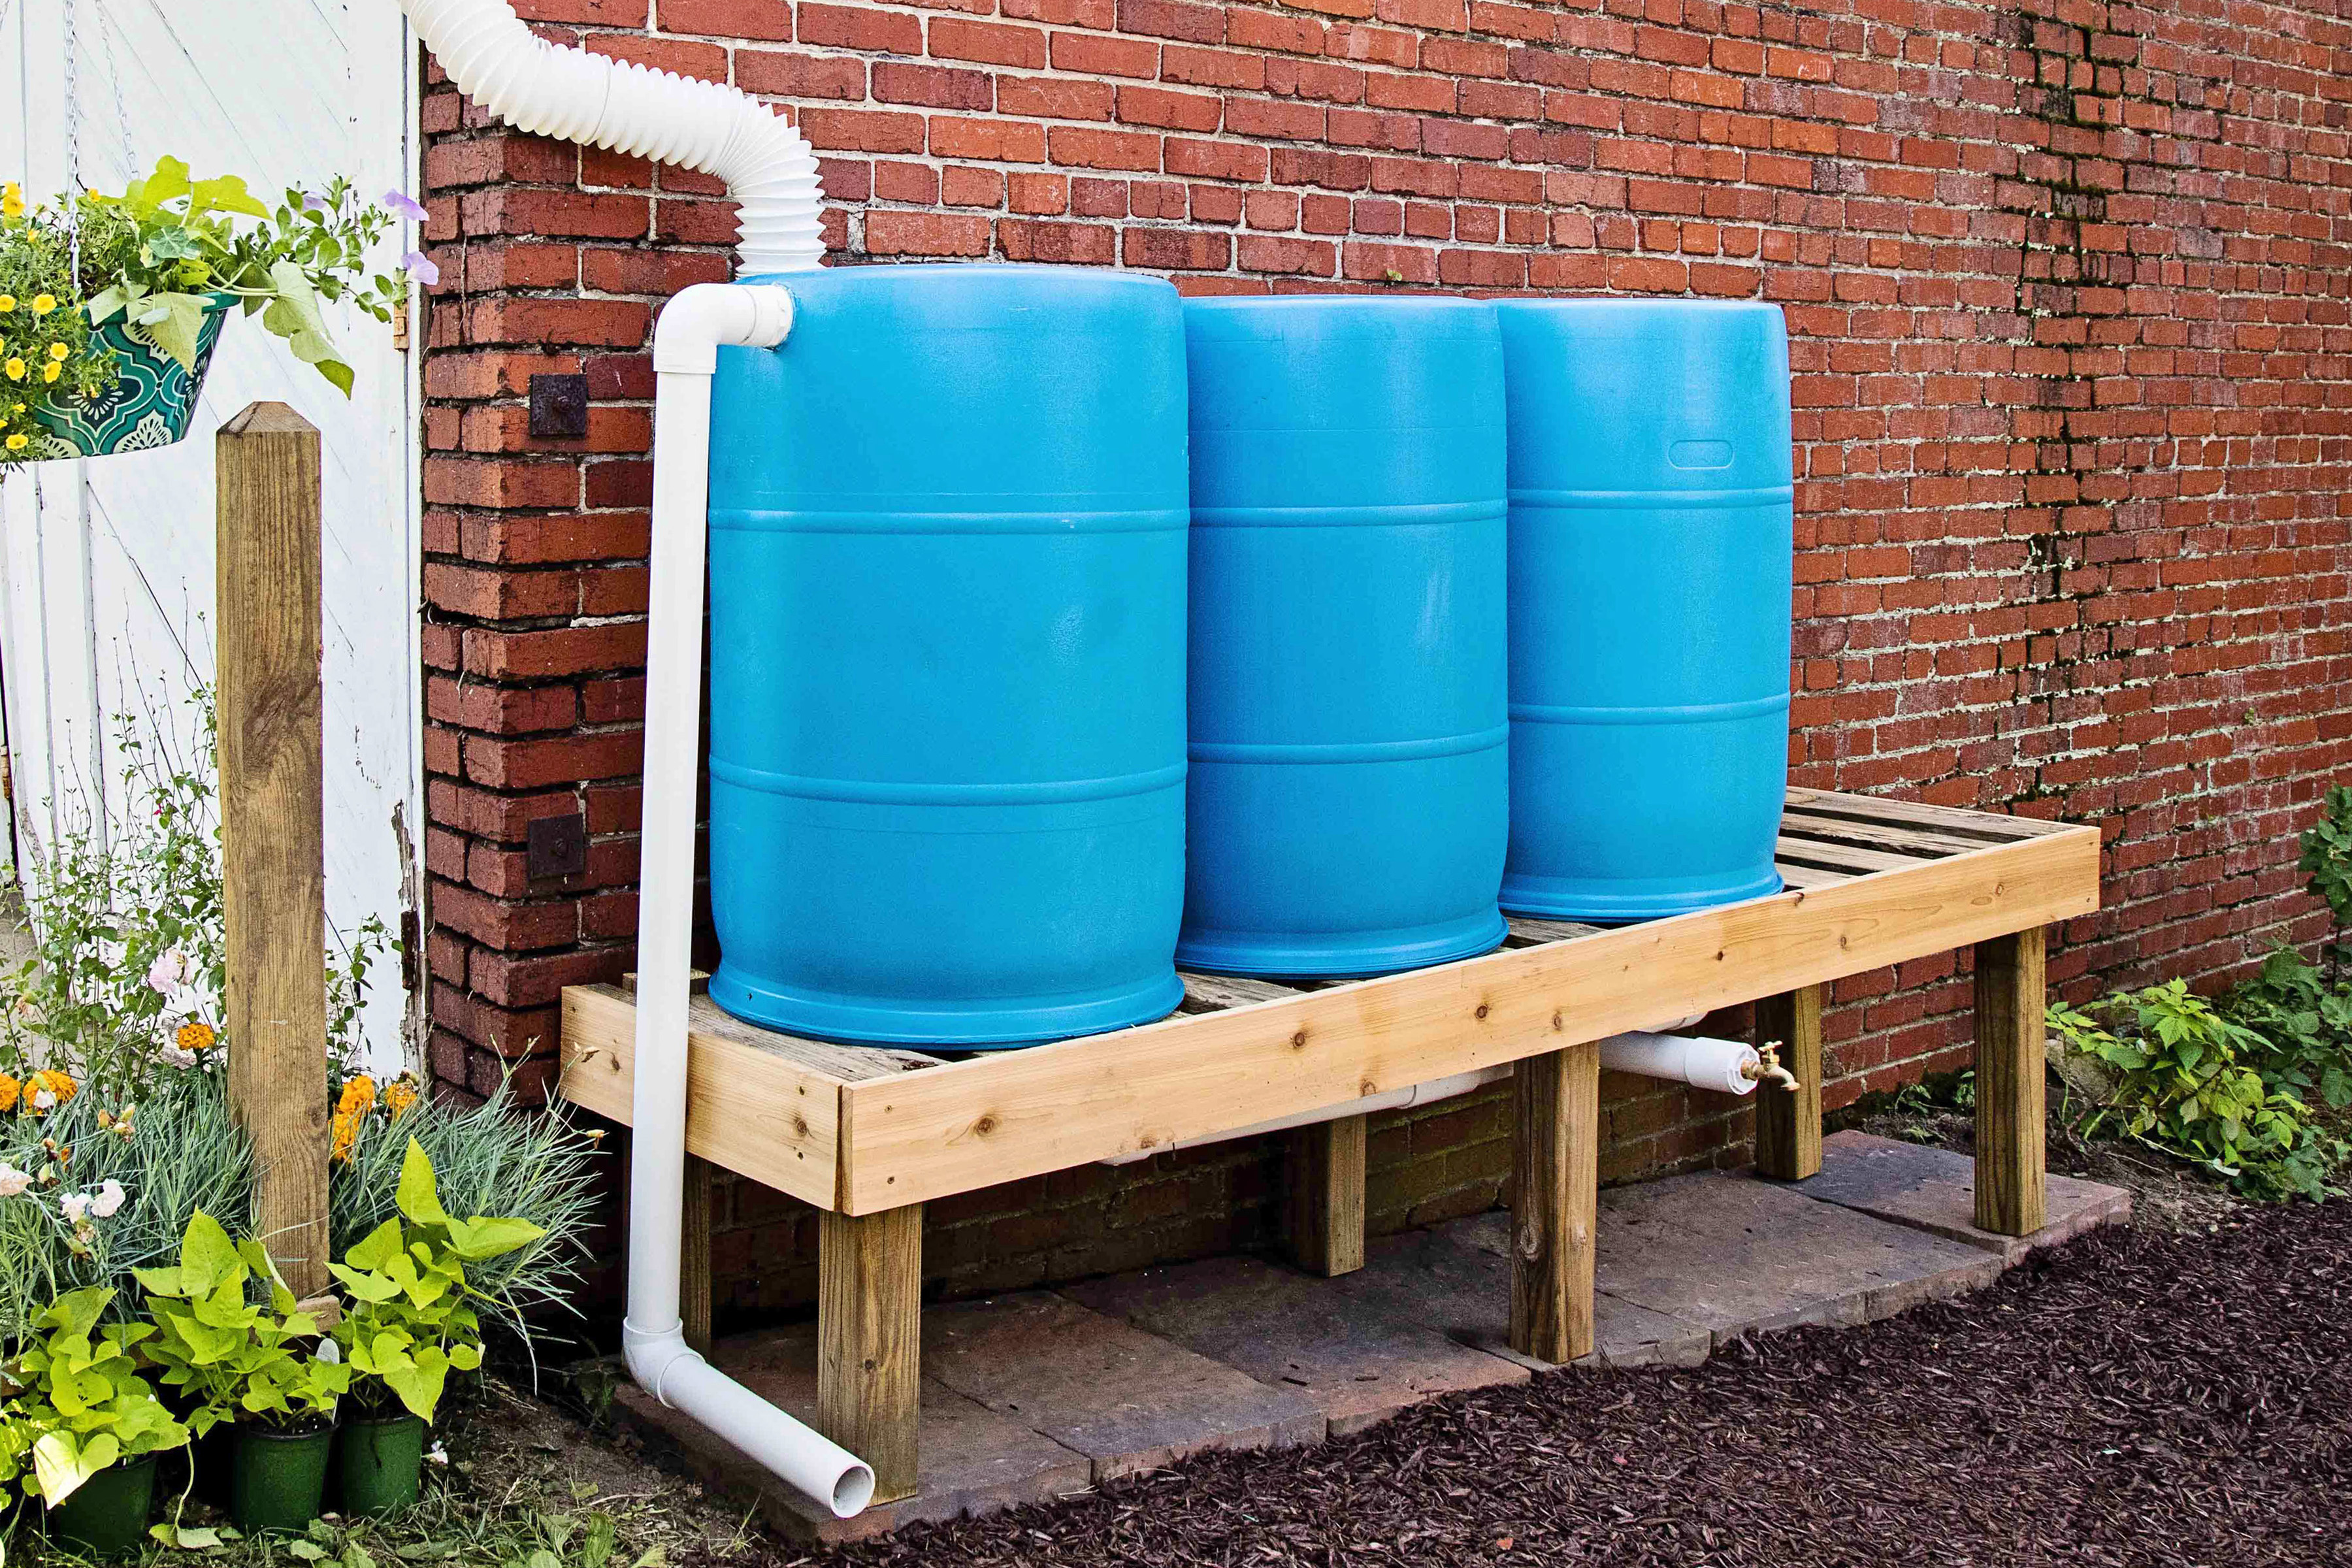 Rain tonne in Wine Barrel Design 120 Litre Water Storage Tank Rain Water Rain Storage 